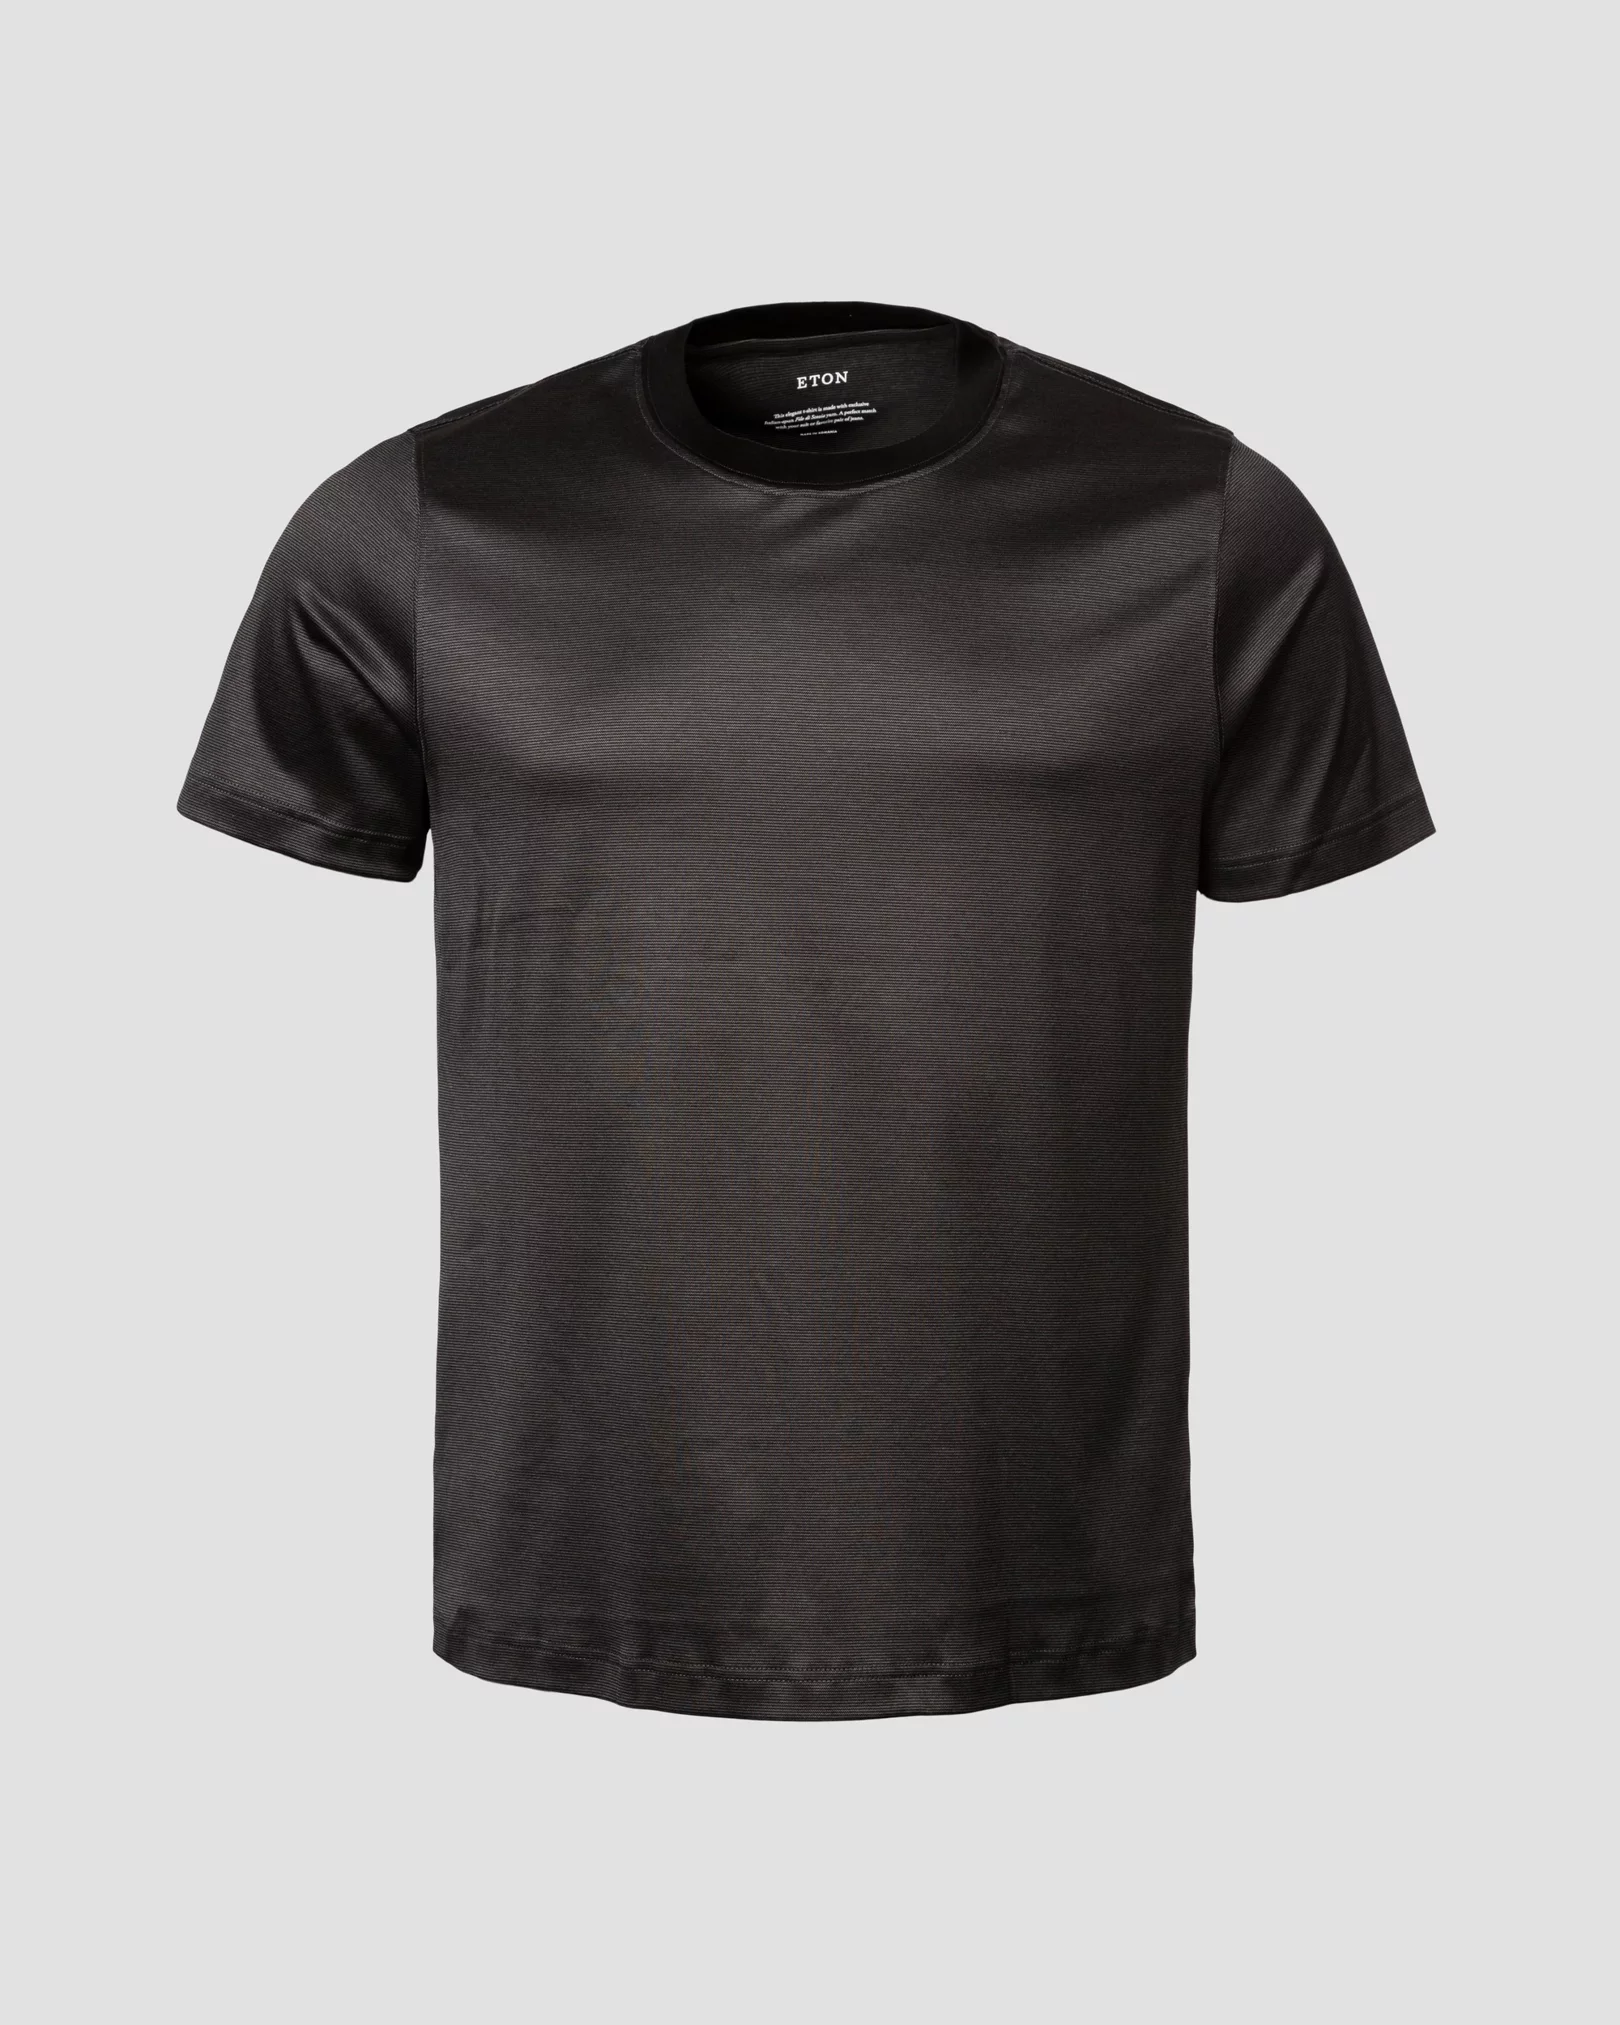 Eton - black interlock jersey t shirt short sleeve